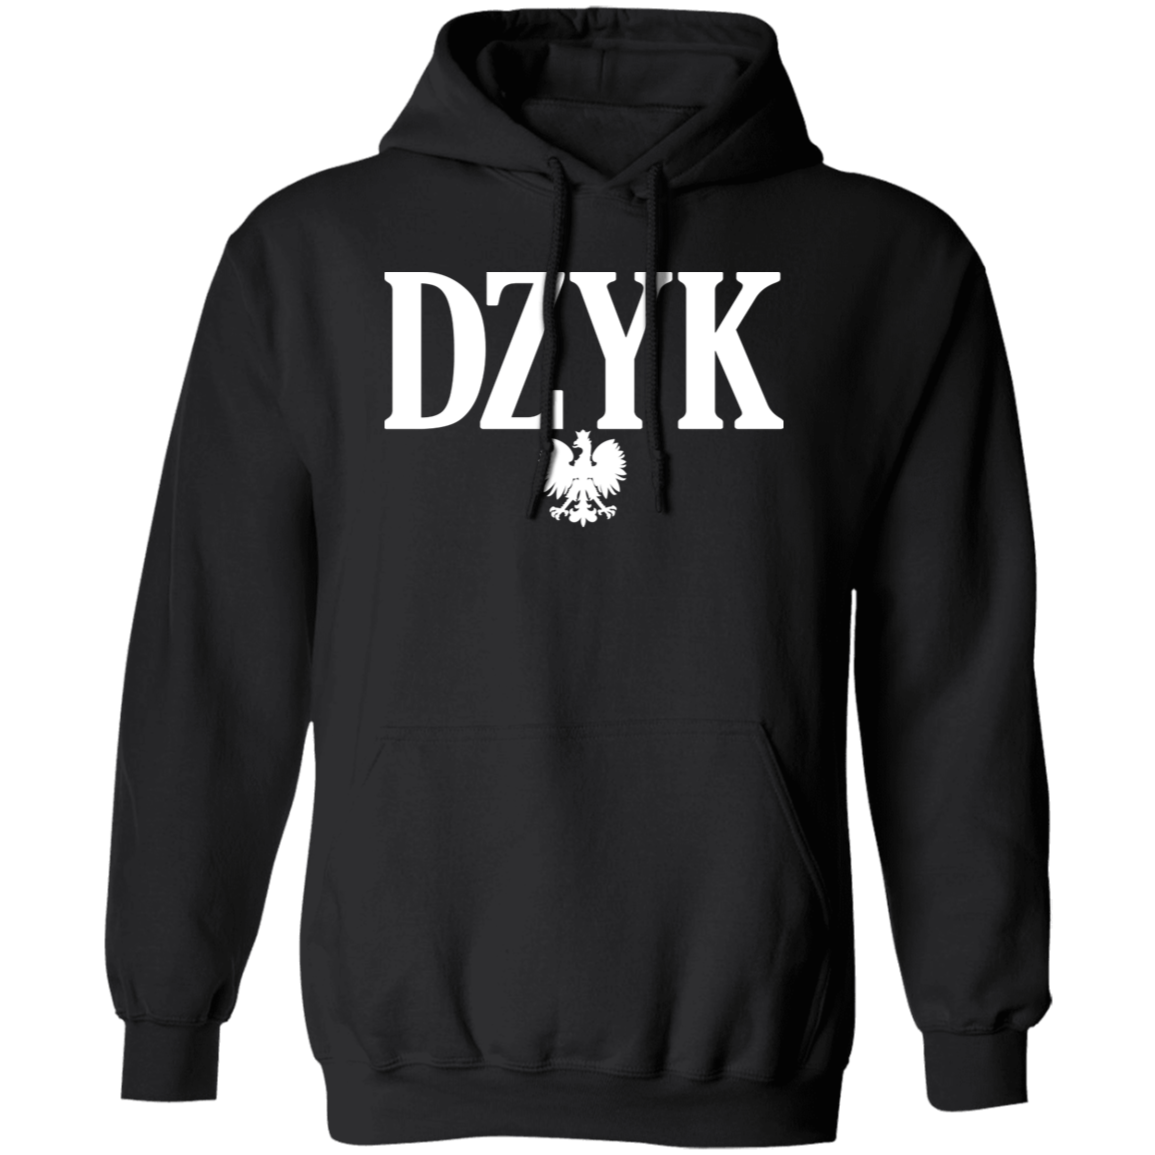 DZYK Polish Surname Ending Apparel CustomCat G185 Pullover Hoodie Black S